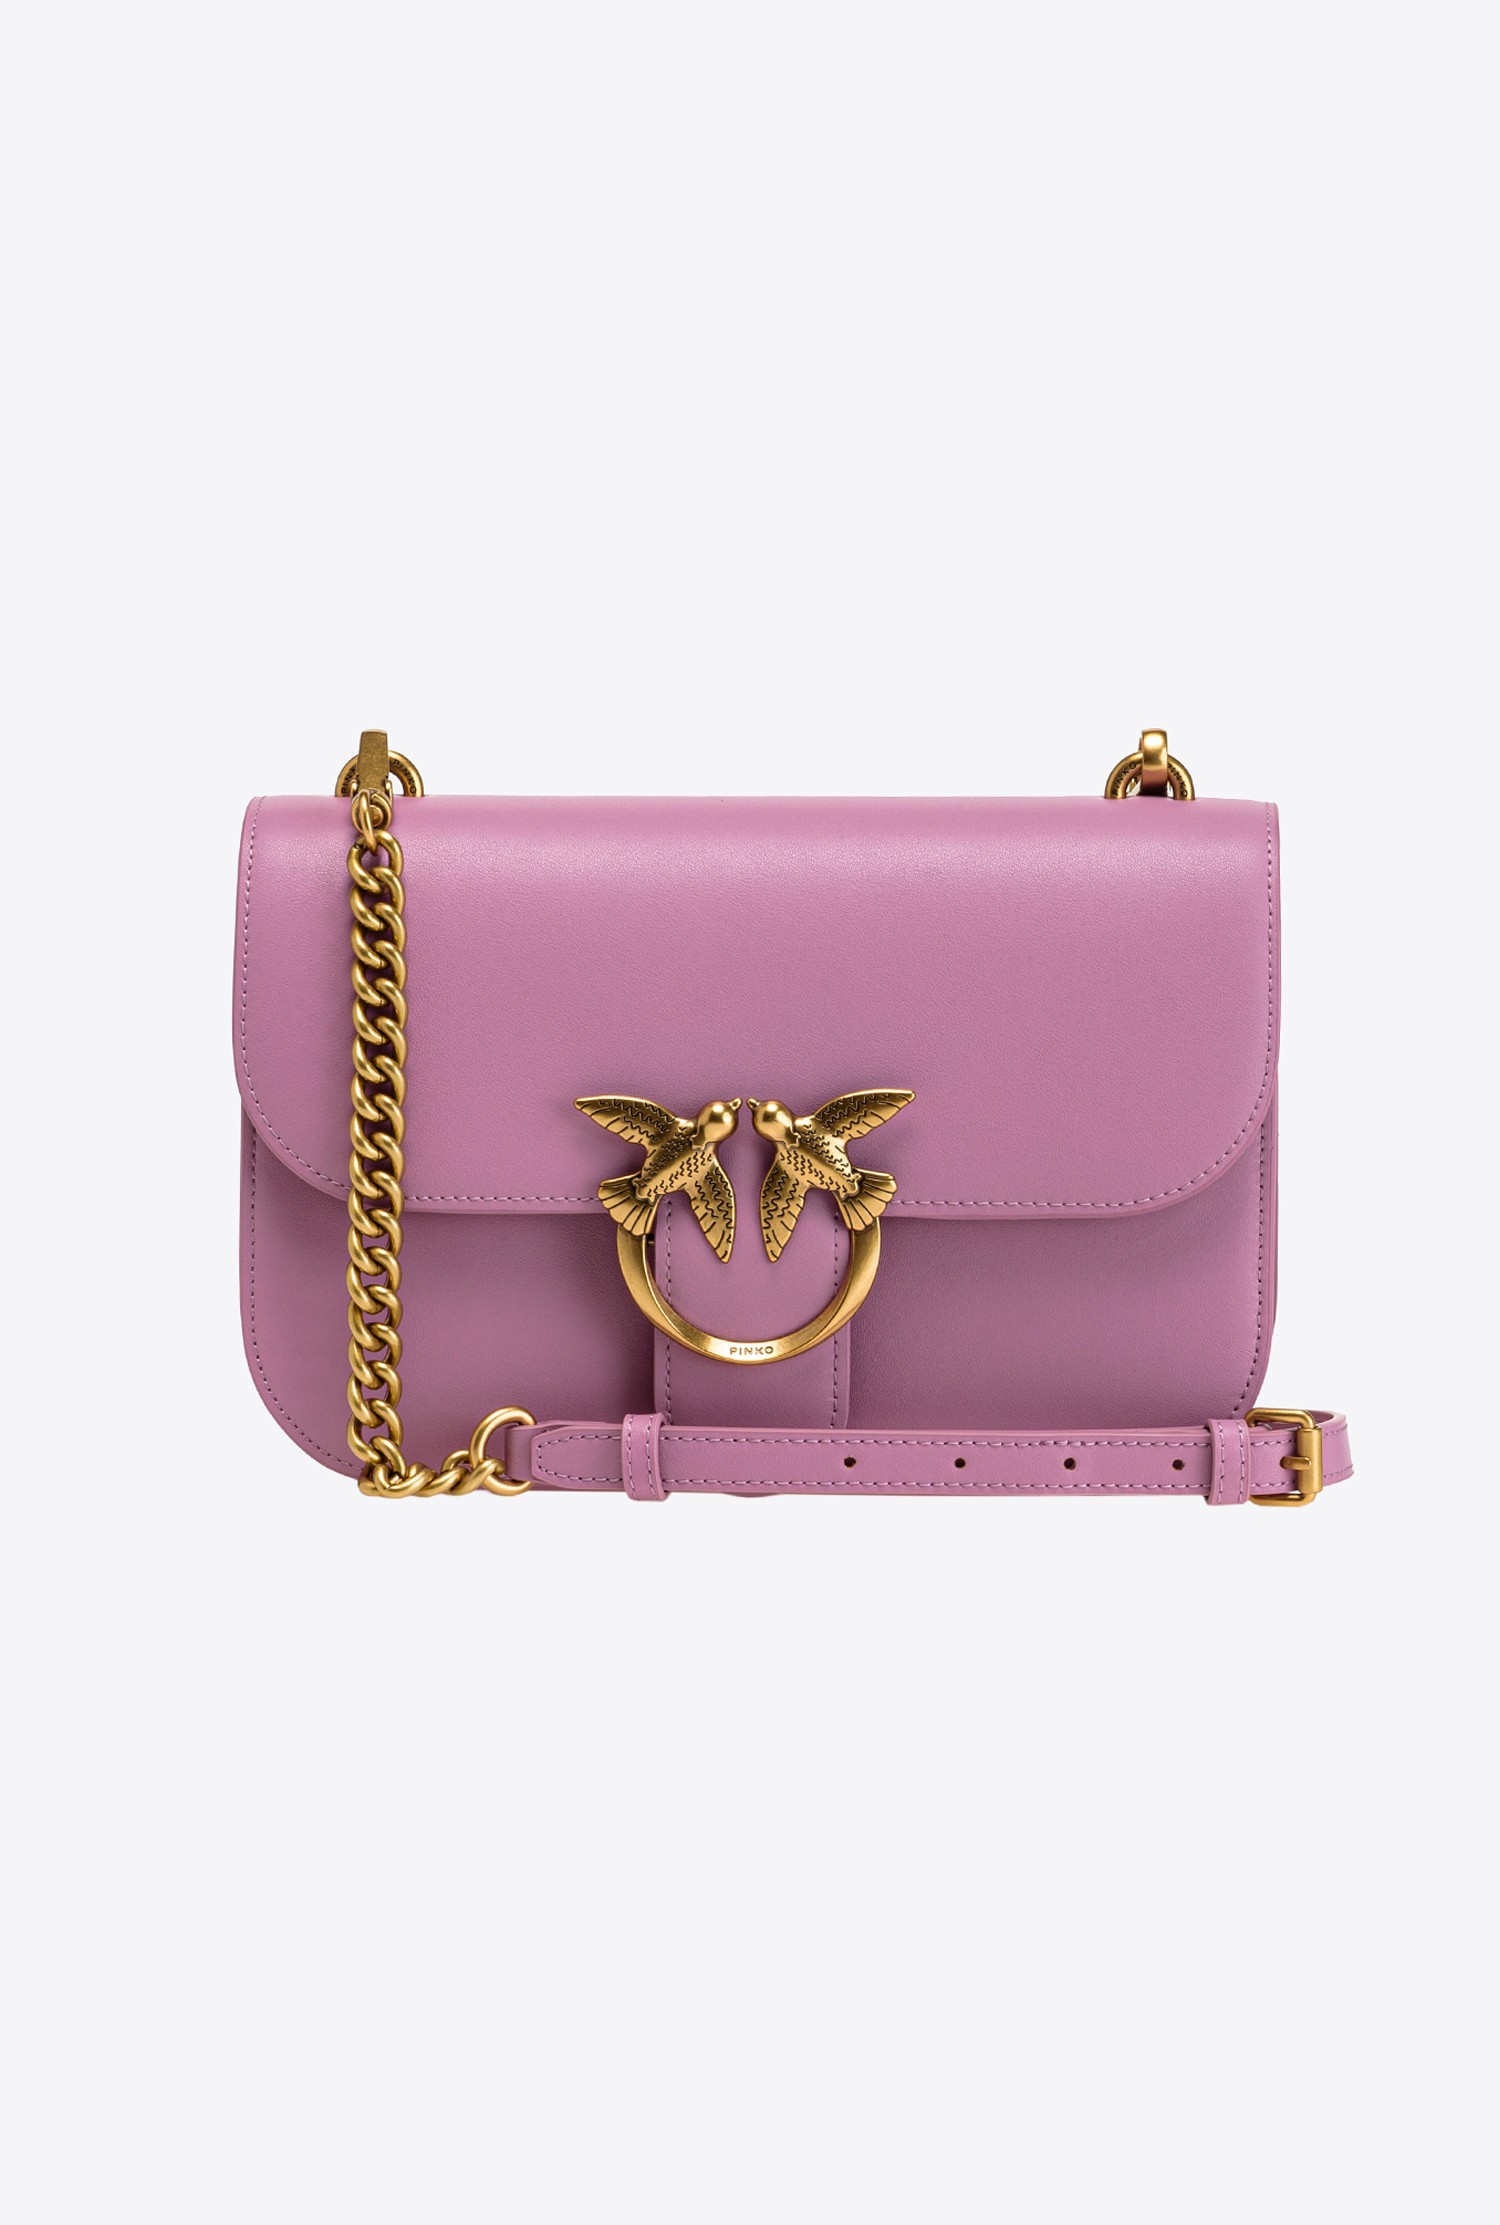 stylish handbags Crossbody bags